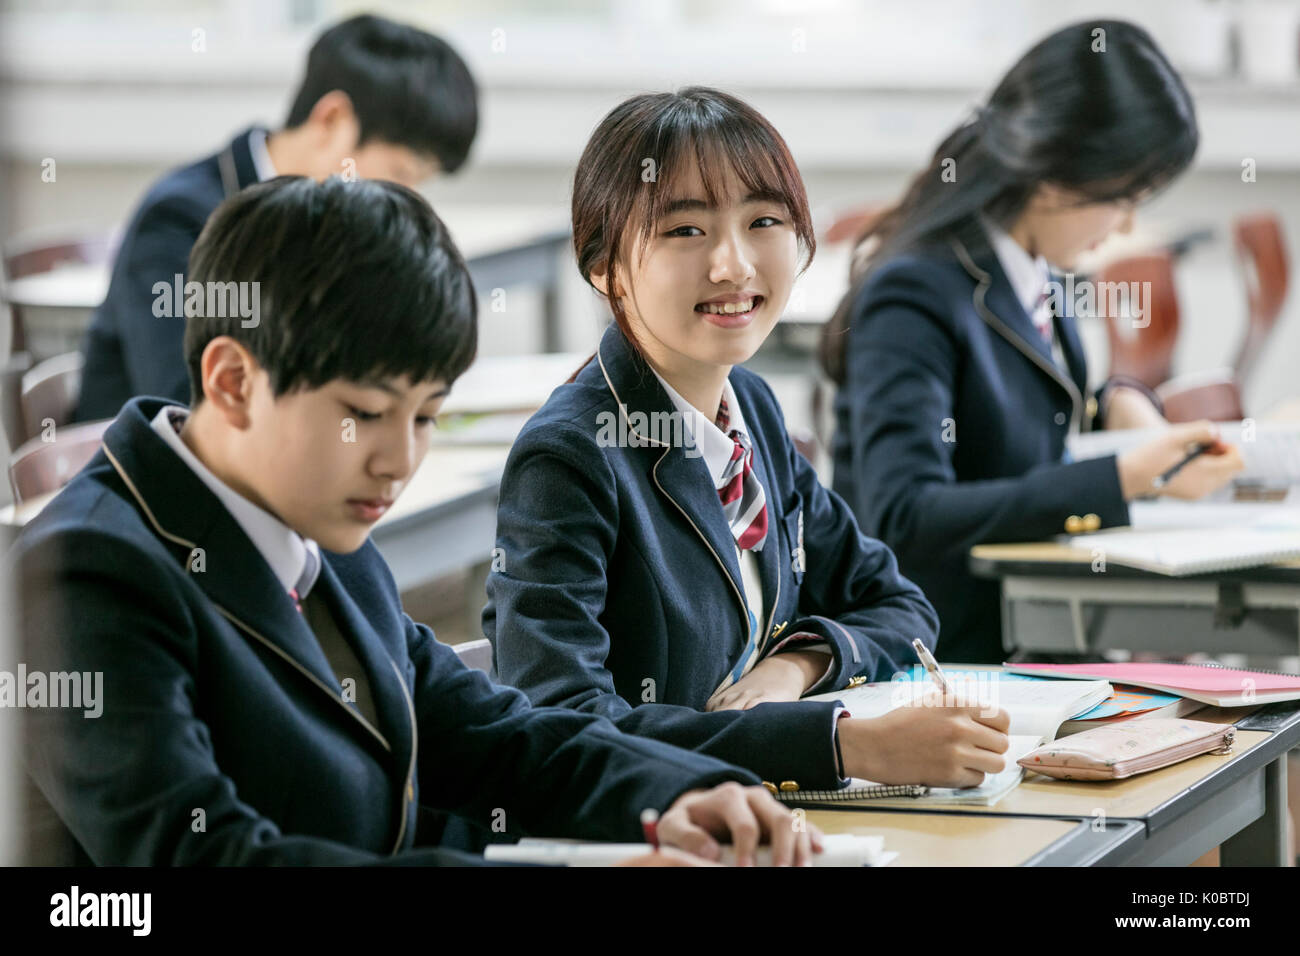 Smiling school girl et ses camarades de classe en tenant Banque D'Images